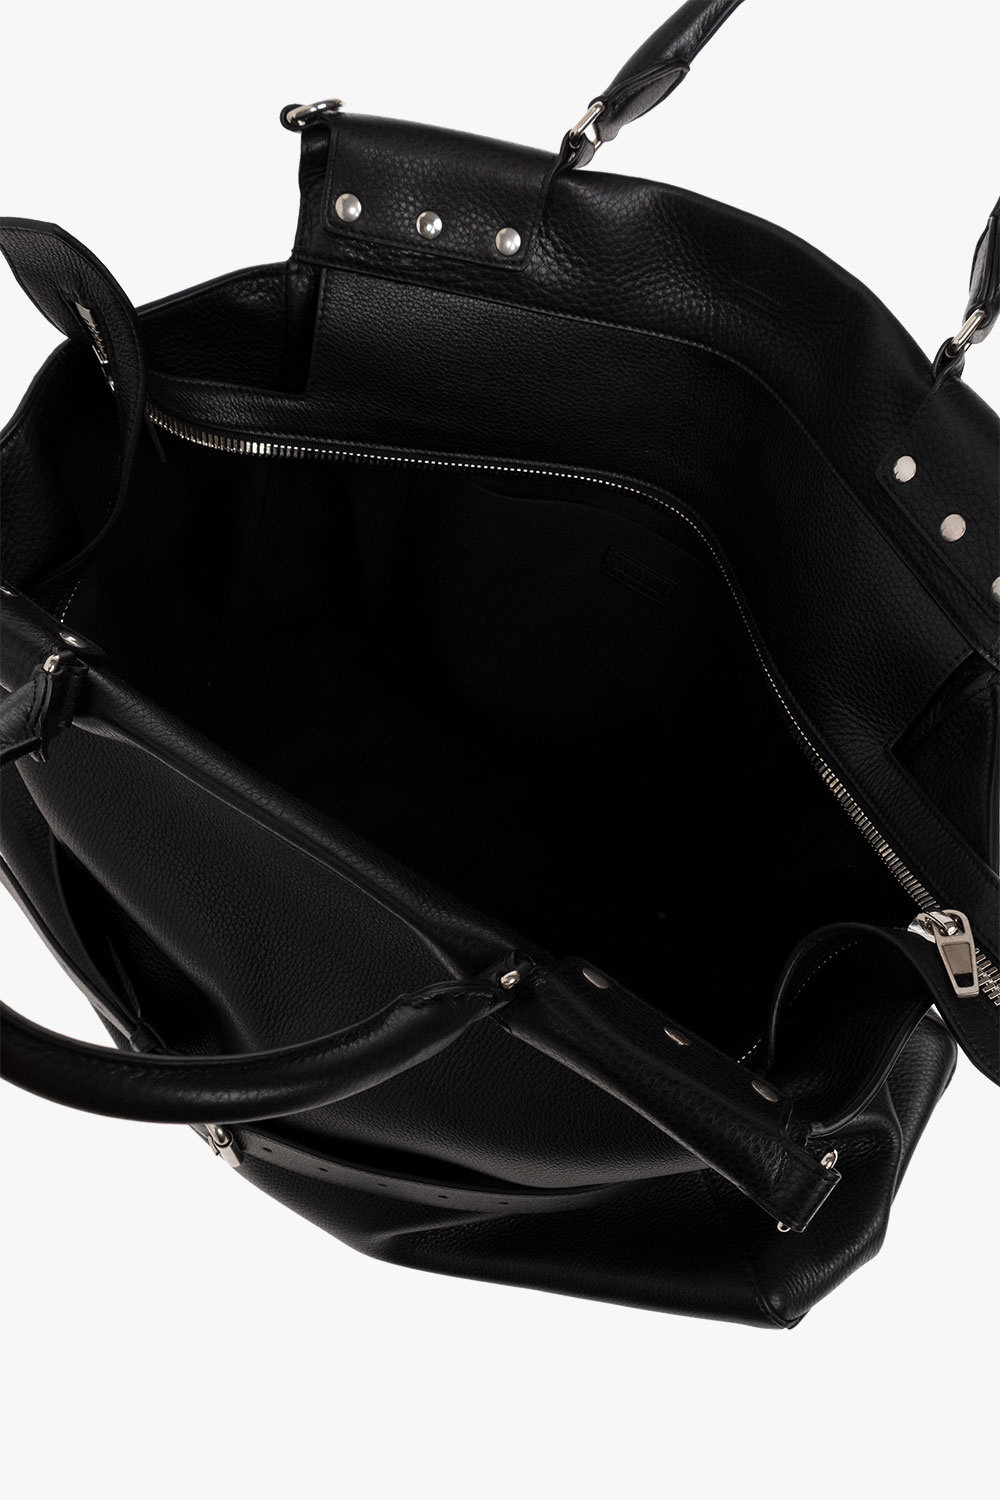 Balenciaga ‘Waist Large’ shopper bag